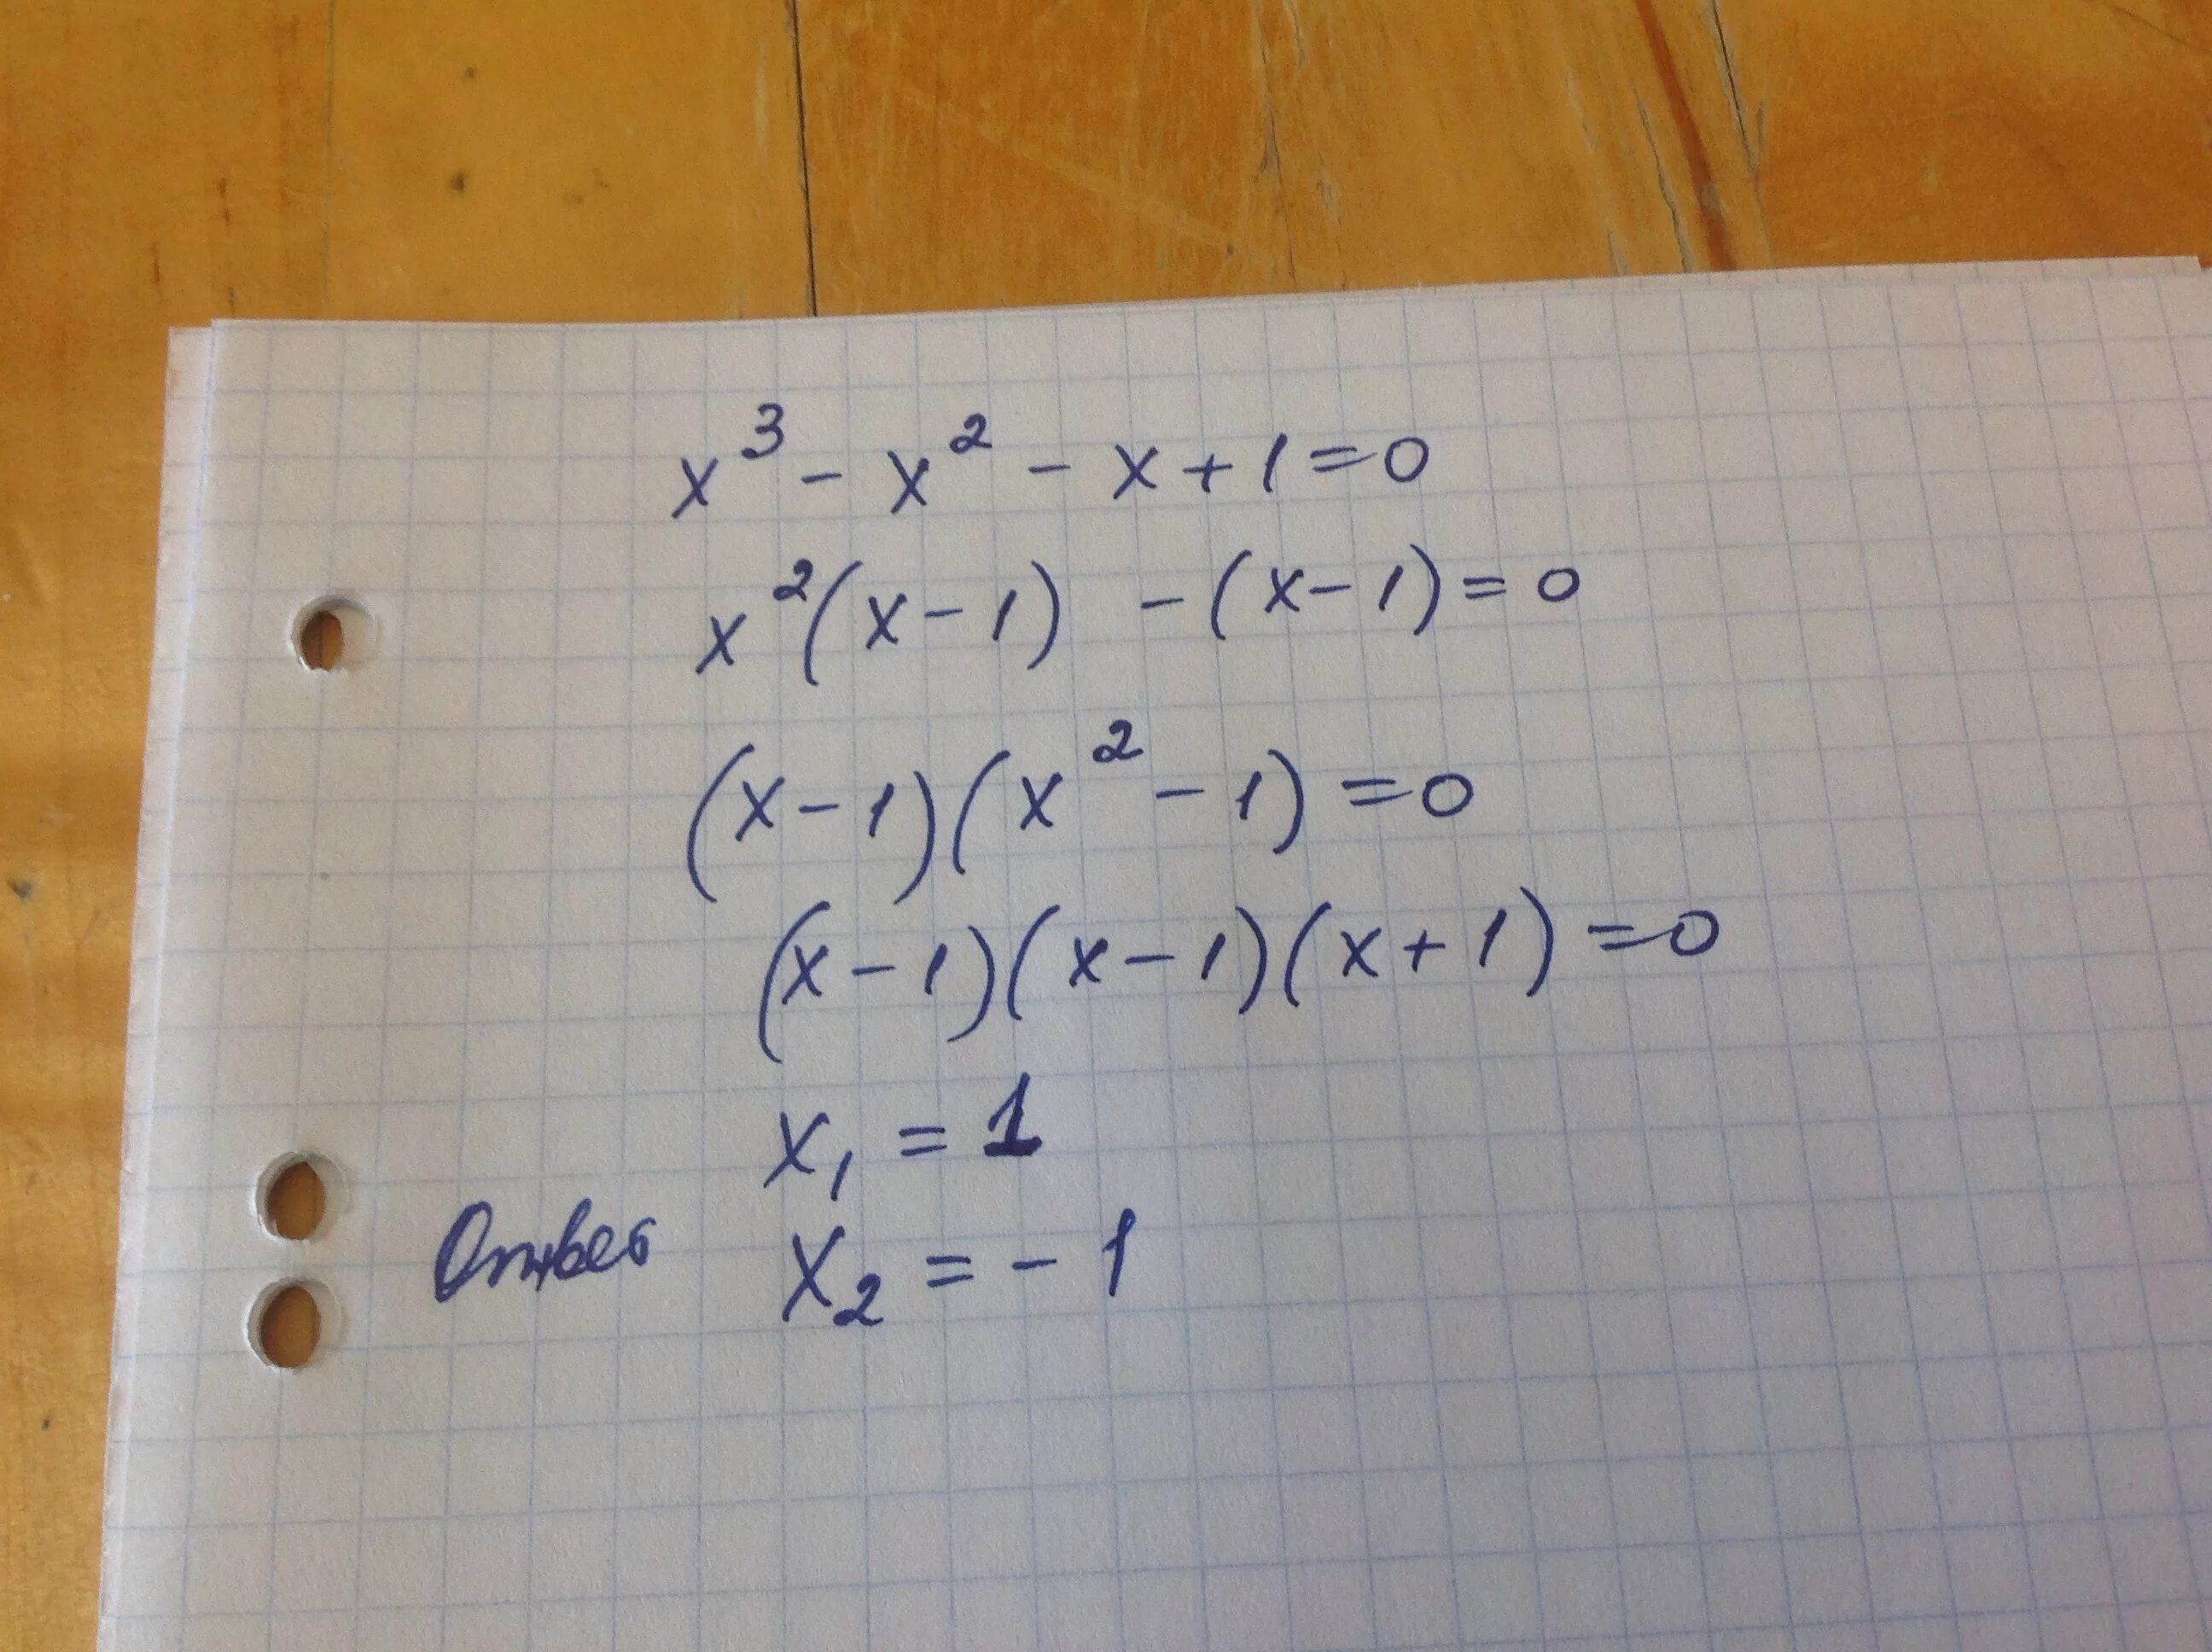 (X-2)(-2x-3)=0. X^3-X^2-X+1=0. 2^X=3^X. 3-X/3=X/2.